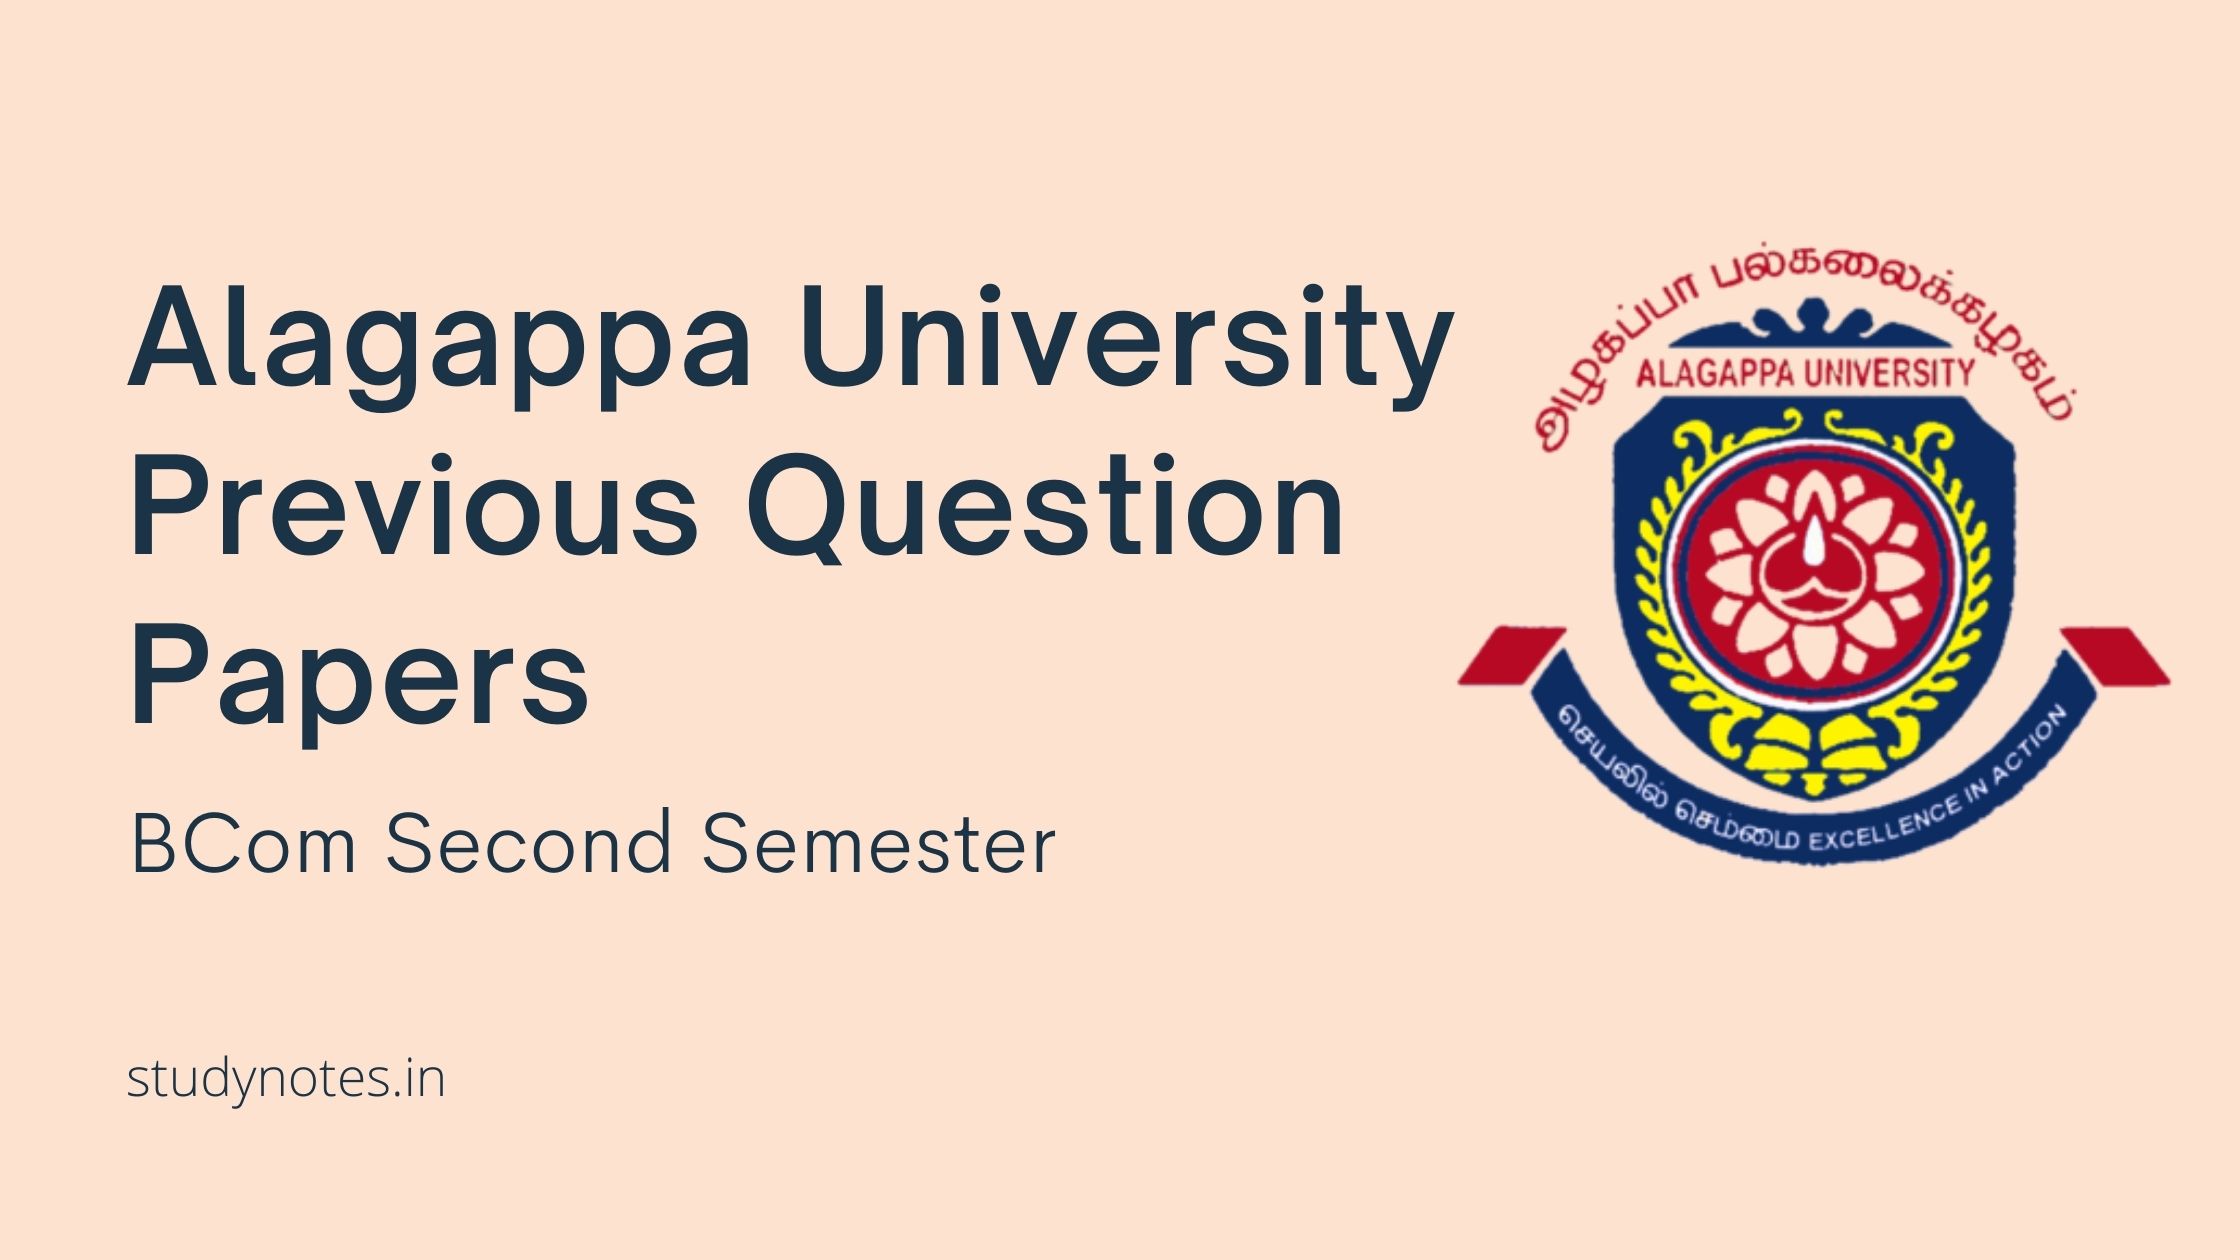 Alagappa University BCom Second Semester Previous Question Paper